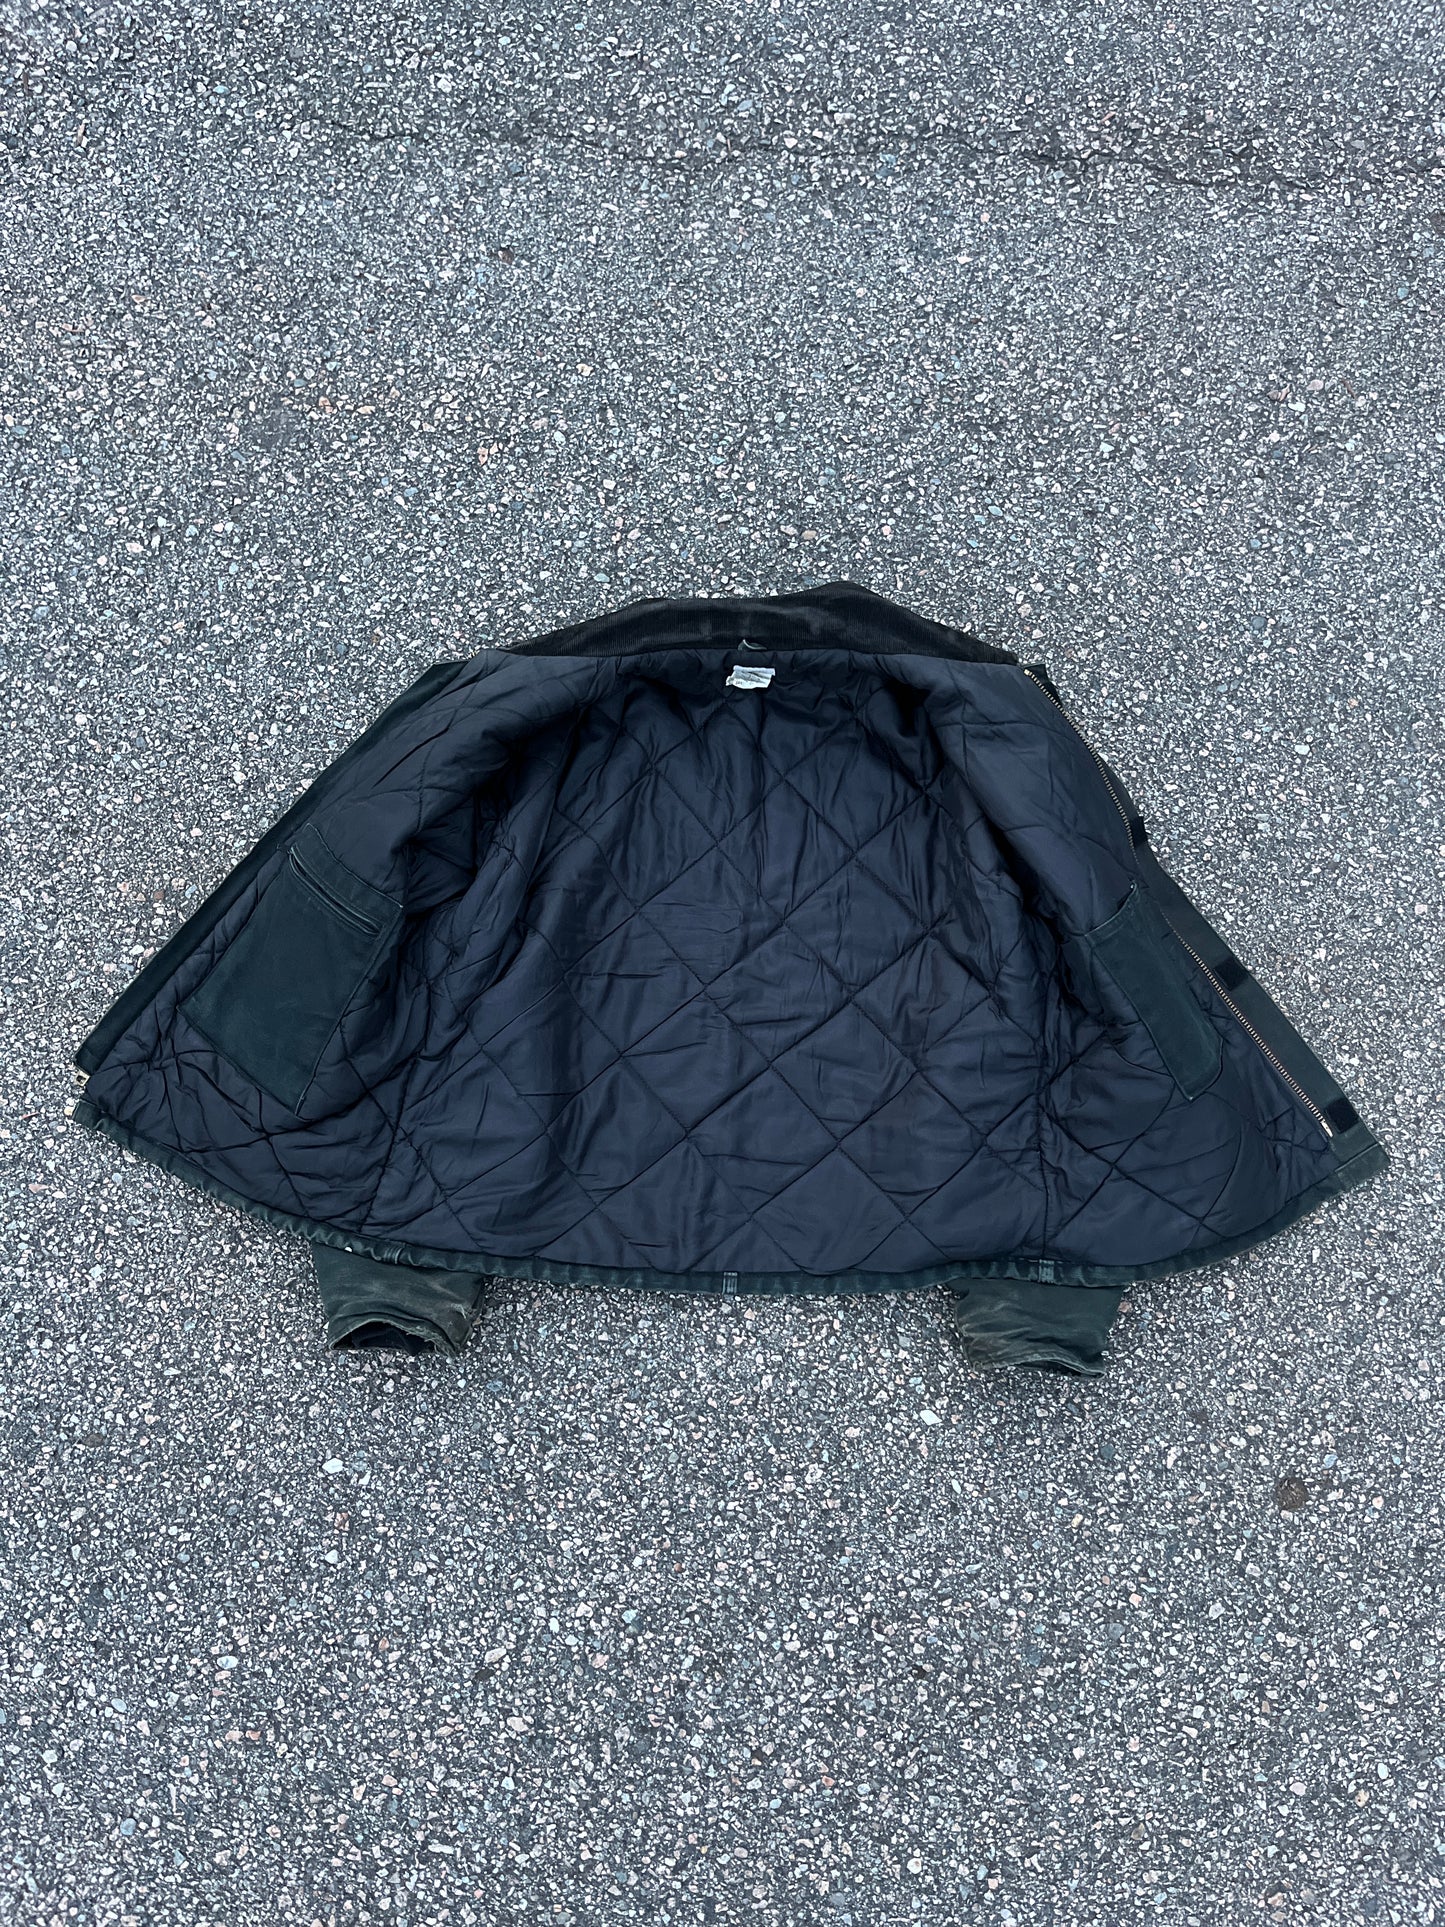 Faded Black Carhartt Arctic Jacket - Large